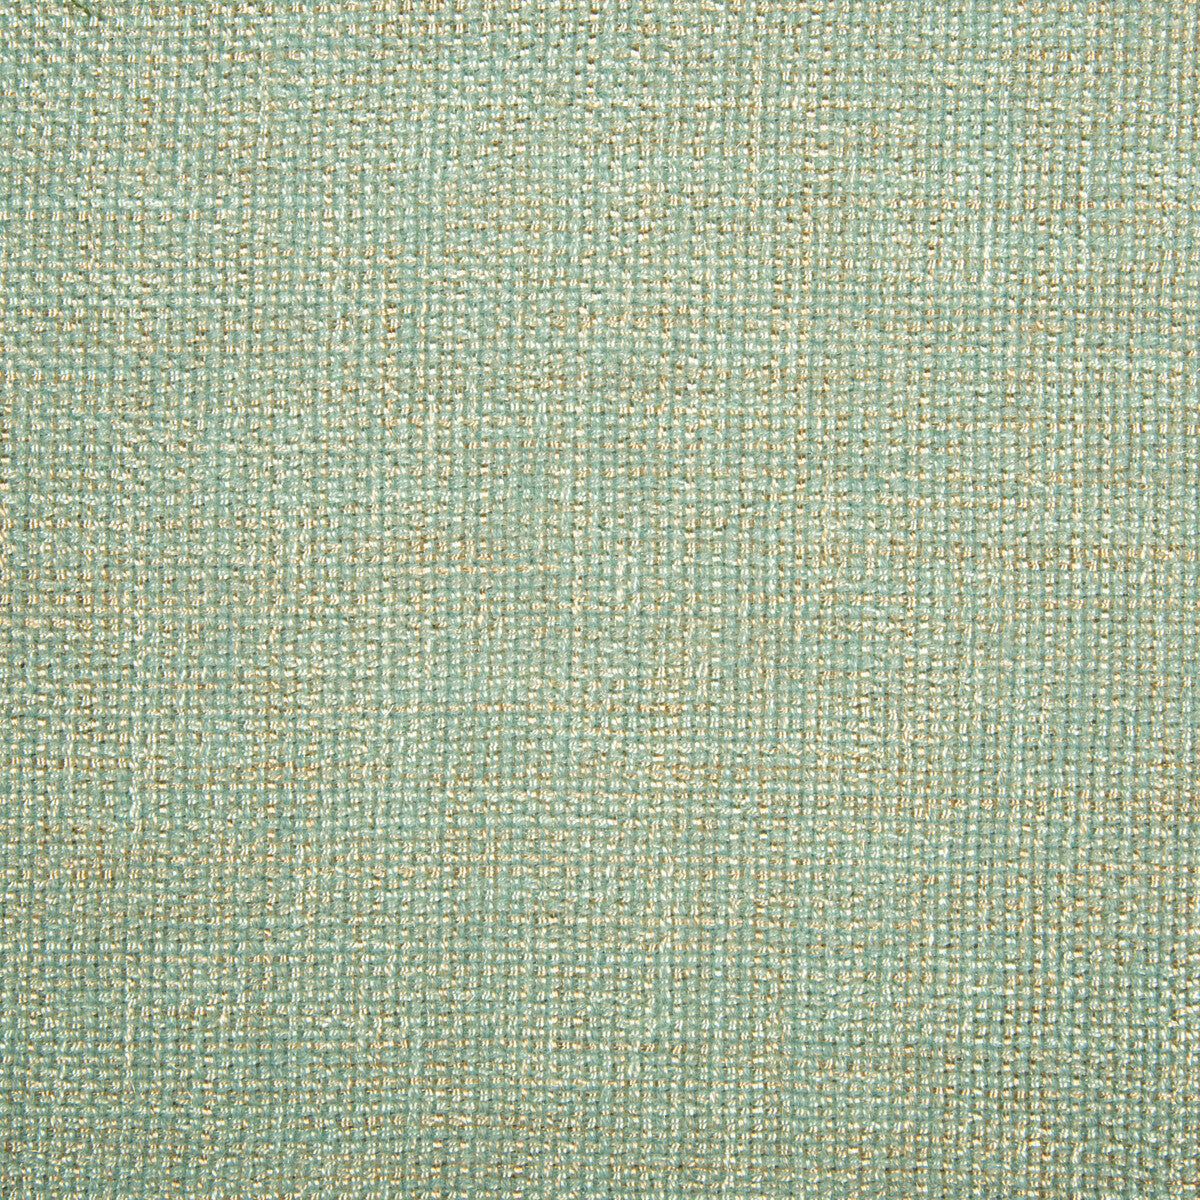 Kravet Smart fabric in 34939-1615 color - pattern 34939.1615.0 - by Kravet Smart